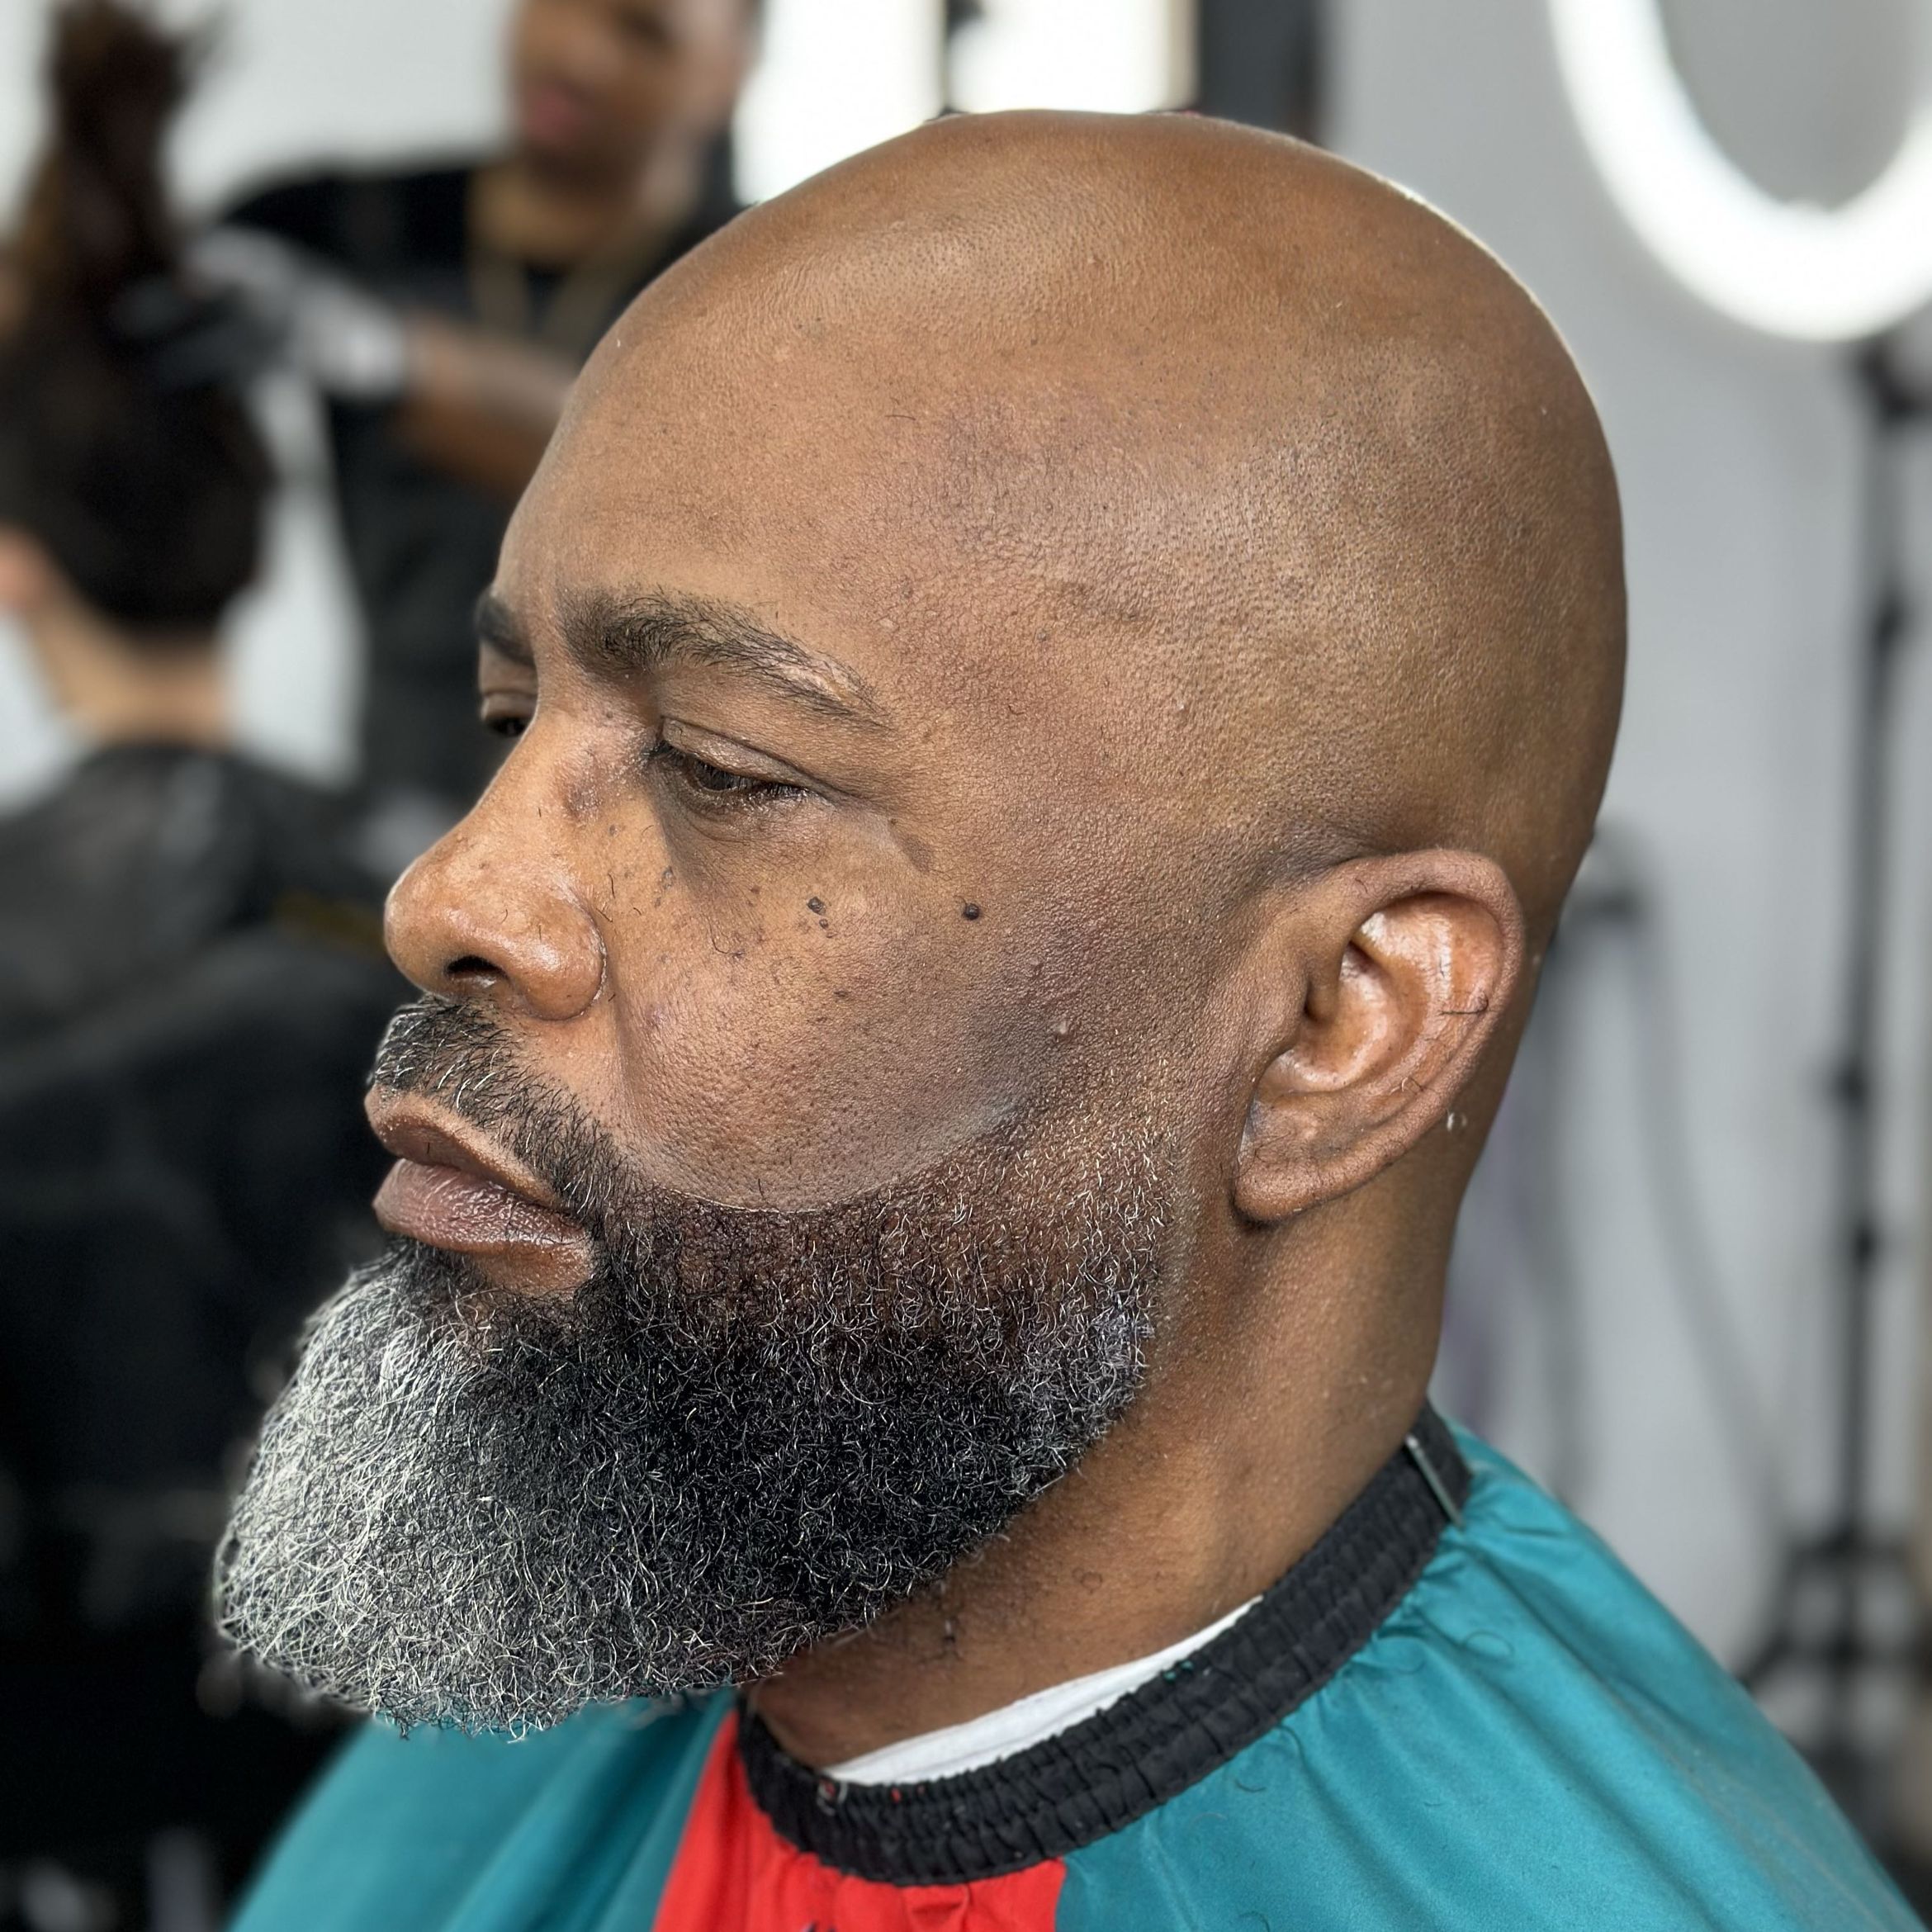 Sunday bald razor shave includes beard service on portfolio